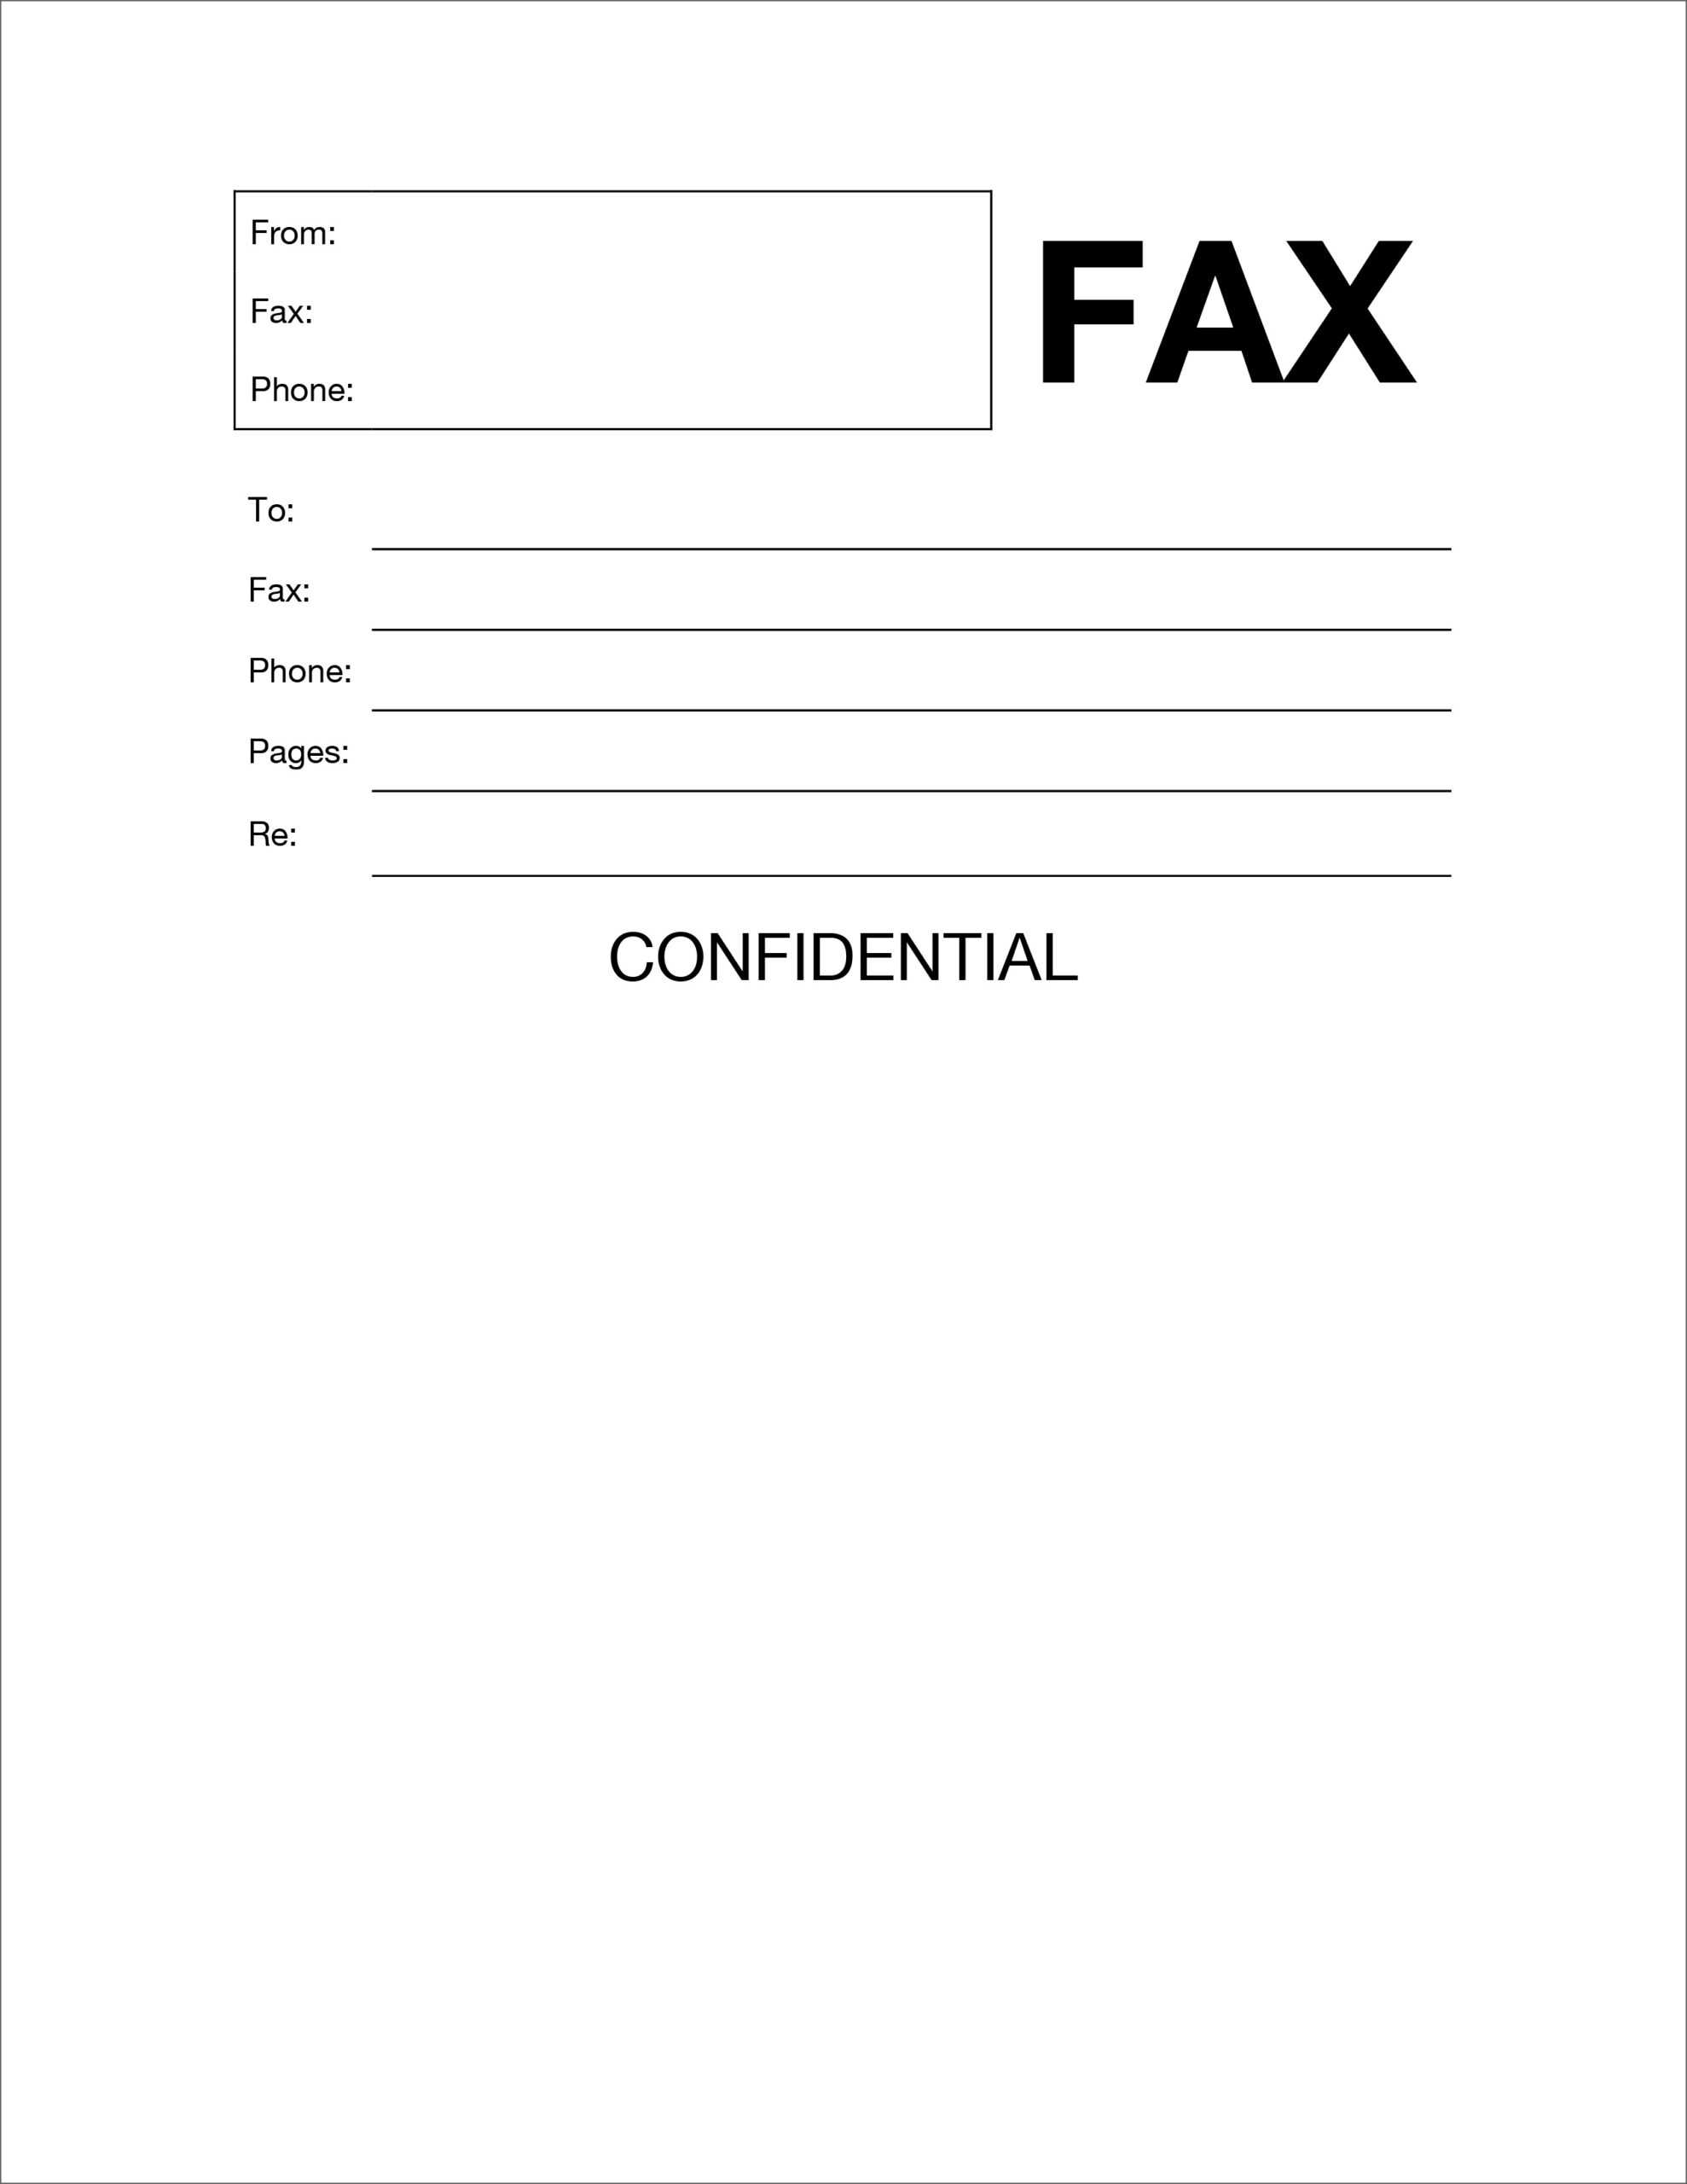 Fax Cover Sheet Templates Word – Raptor.redmini.co Regarding Fax Cover Sheet Template Word 2010